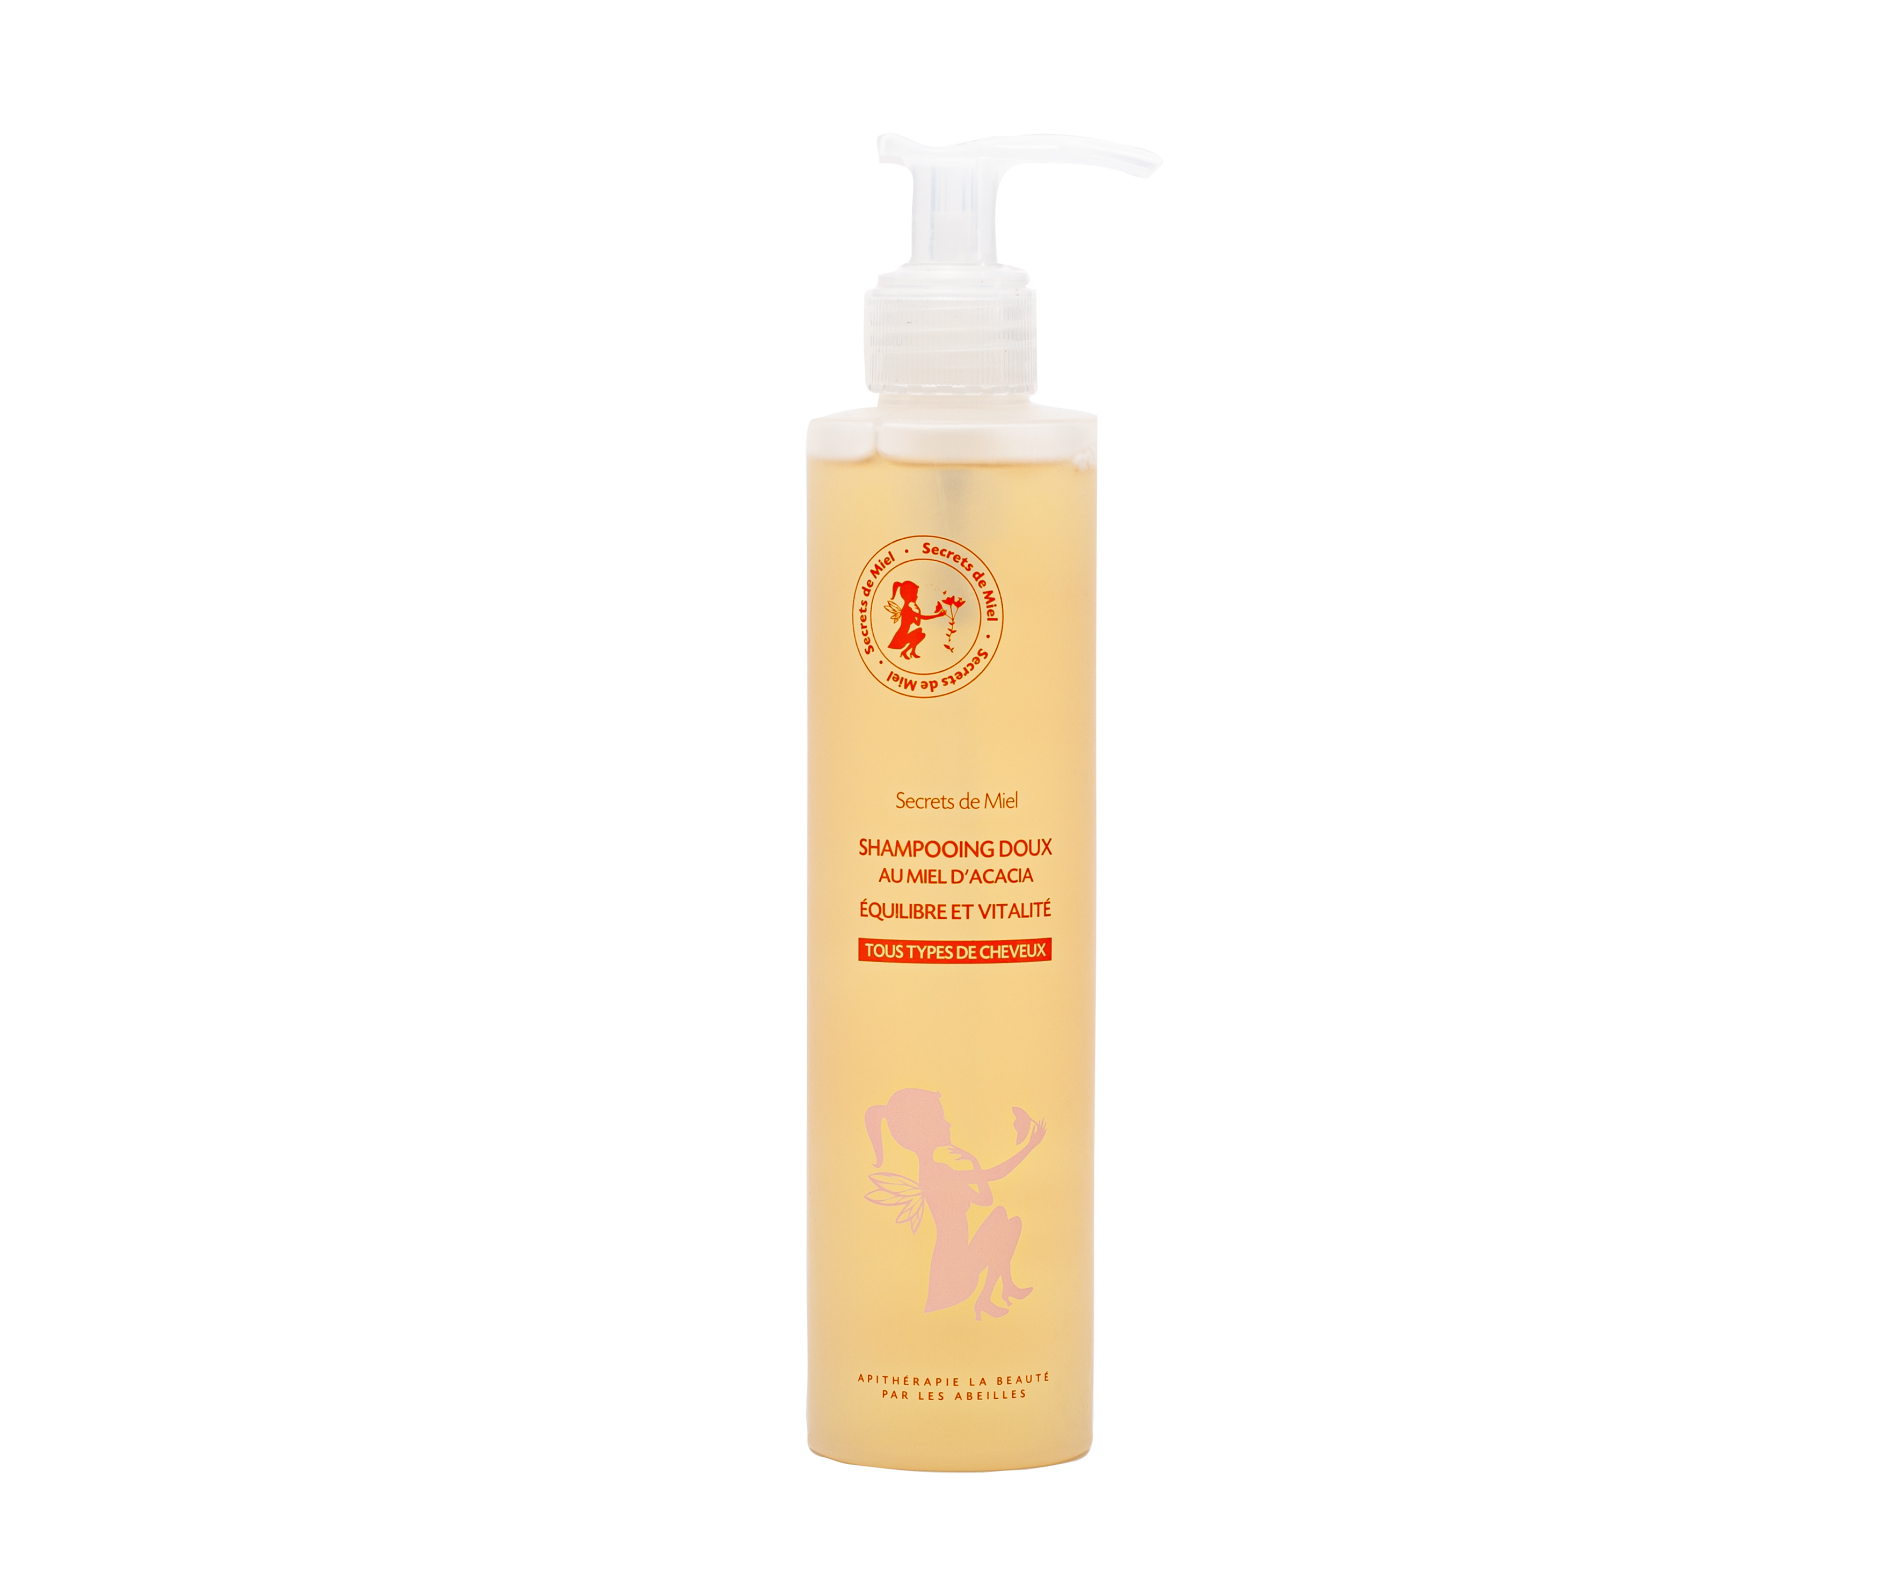 Secrets de Miel - shampooing doux - shampooing liquide naturel - shampooing miel - produits naturels - made in France